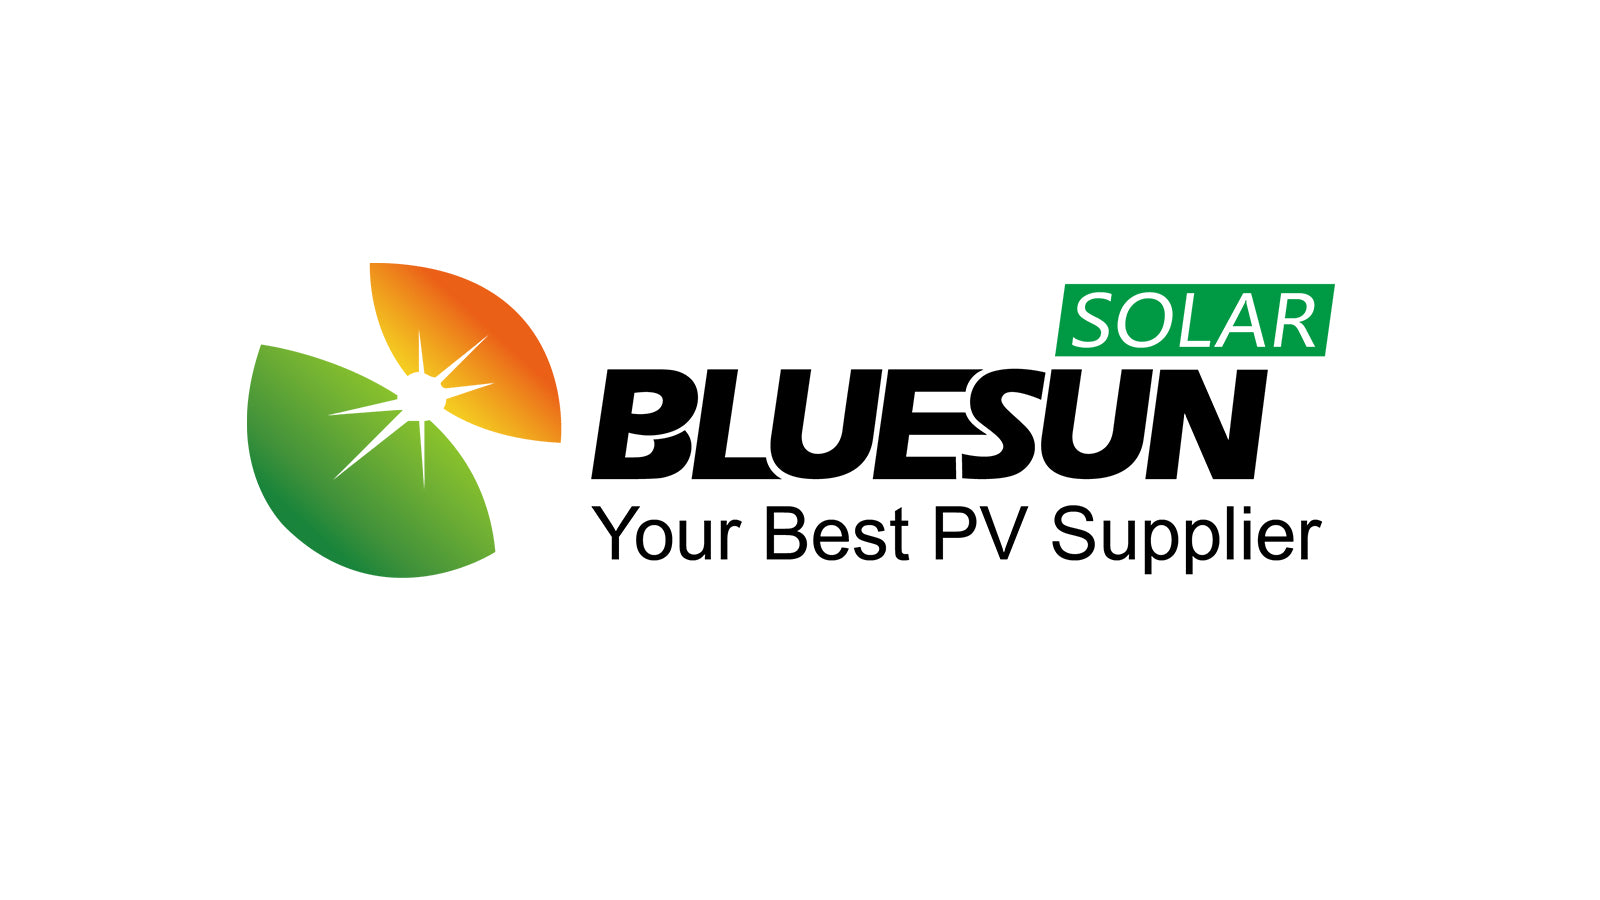 BLUESUN ENJIE 24V 1500W 230V Inverter, Mobile connectivity for car and –  Bluesun Solar DE